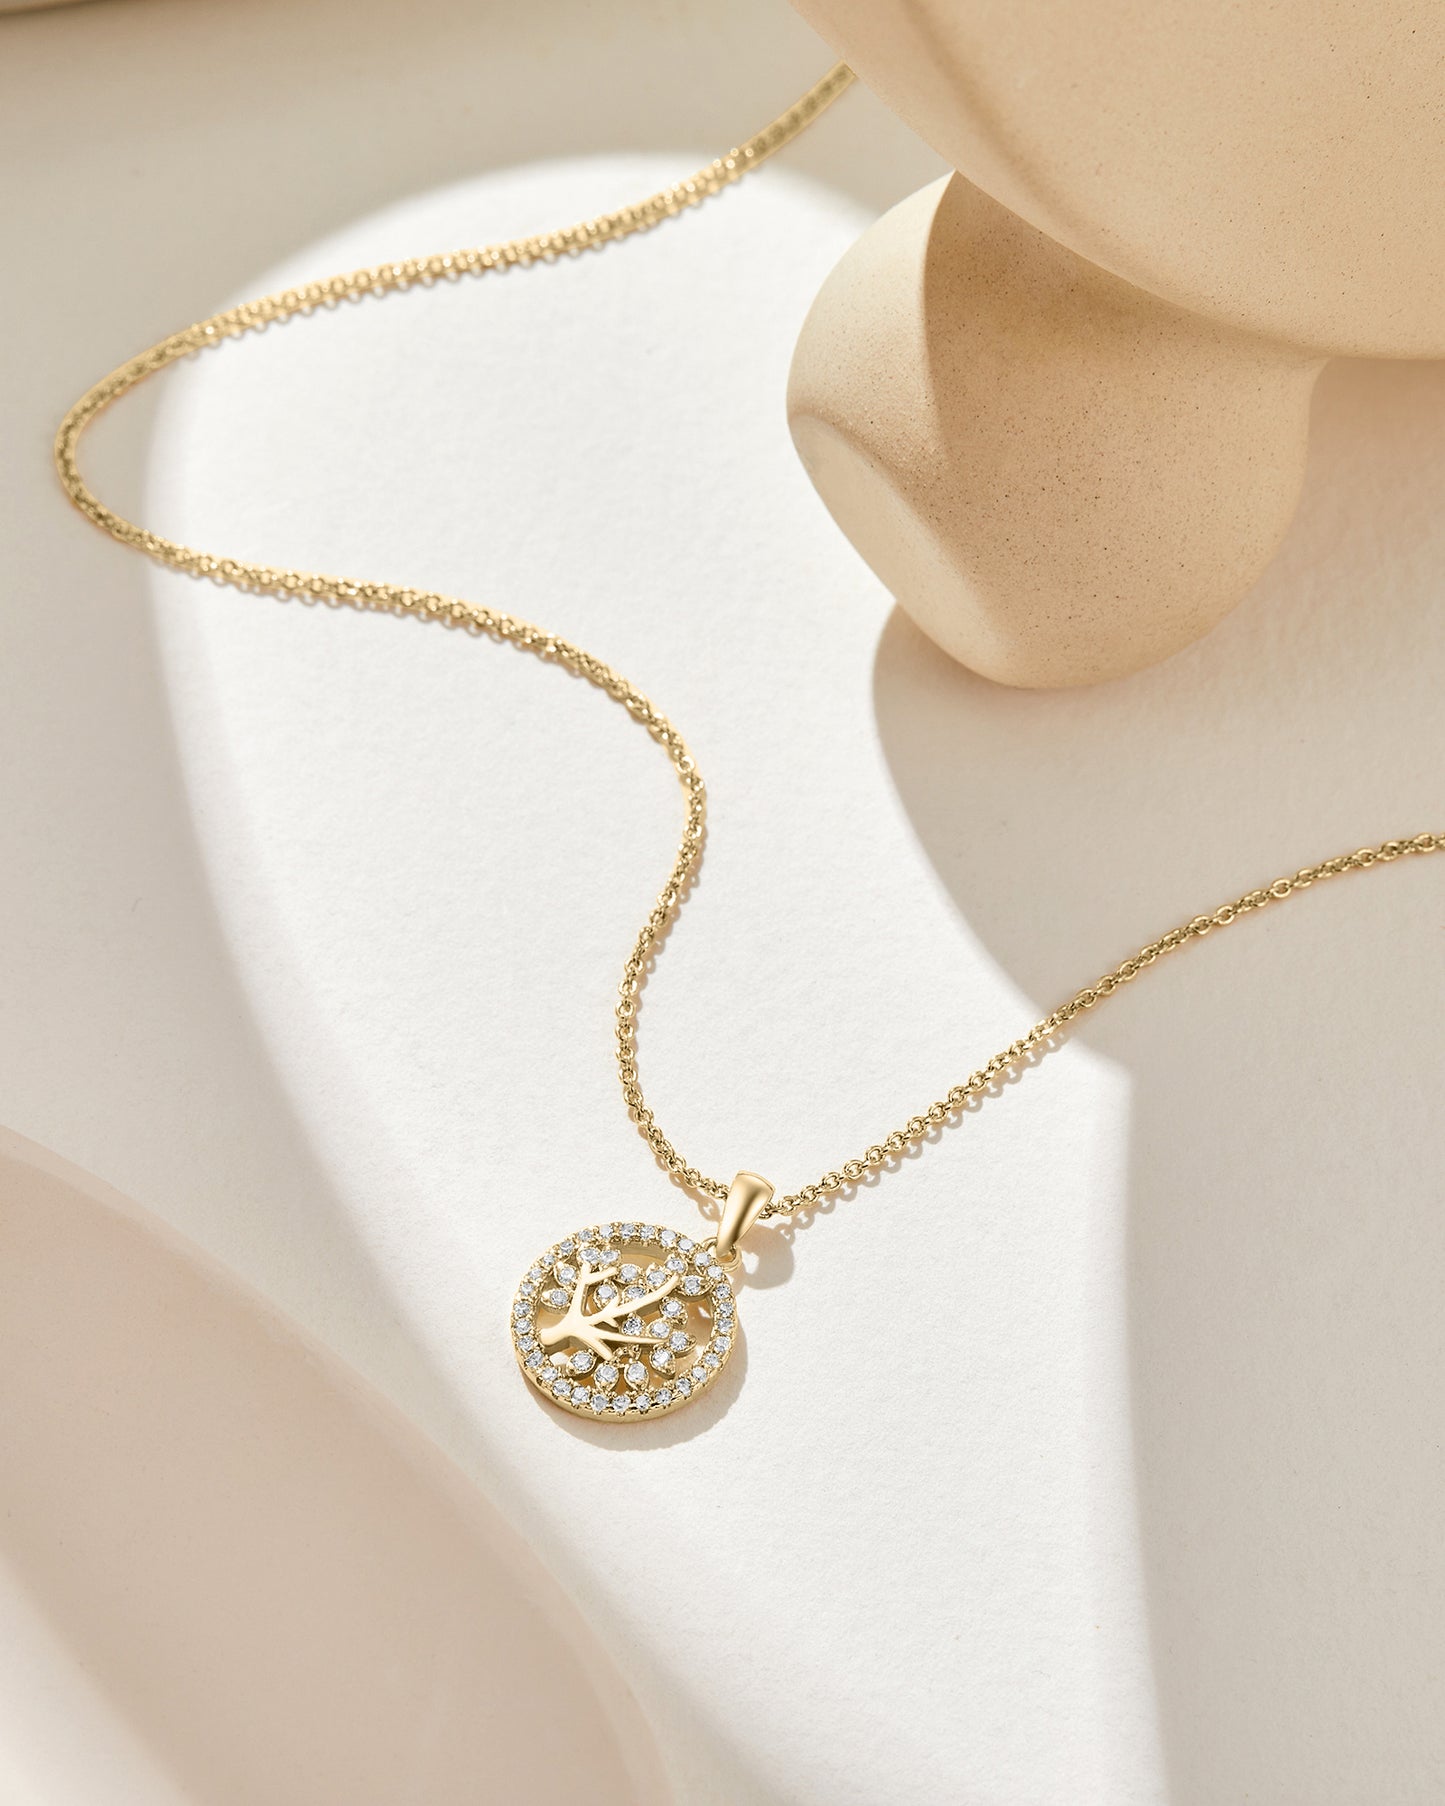 Acorn Oak Leaf Necklace, Antique Copper – Ladybugfeet Jewelry Designs